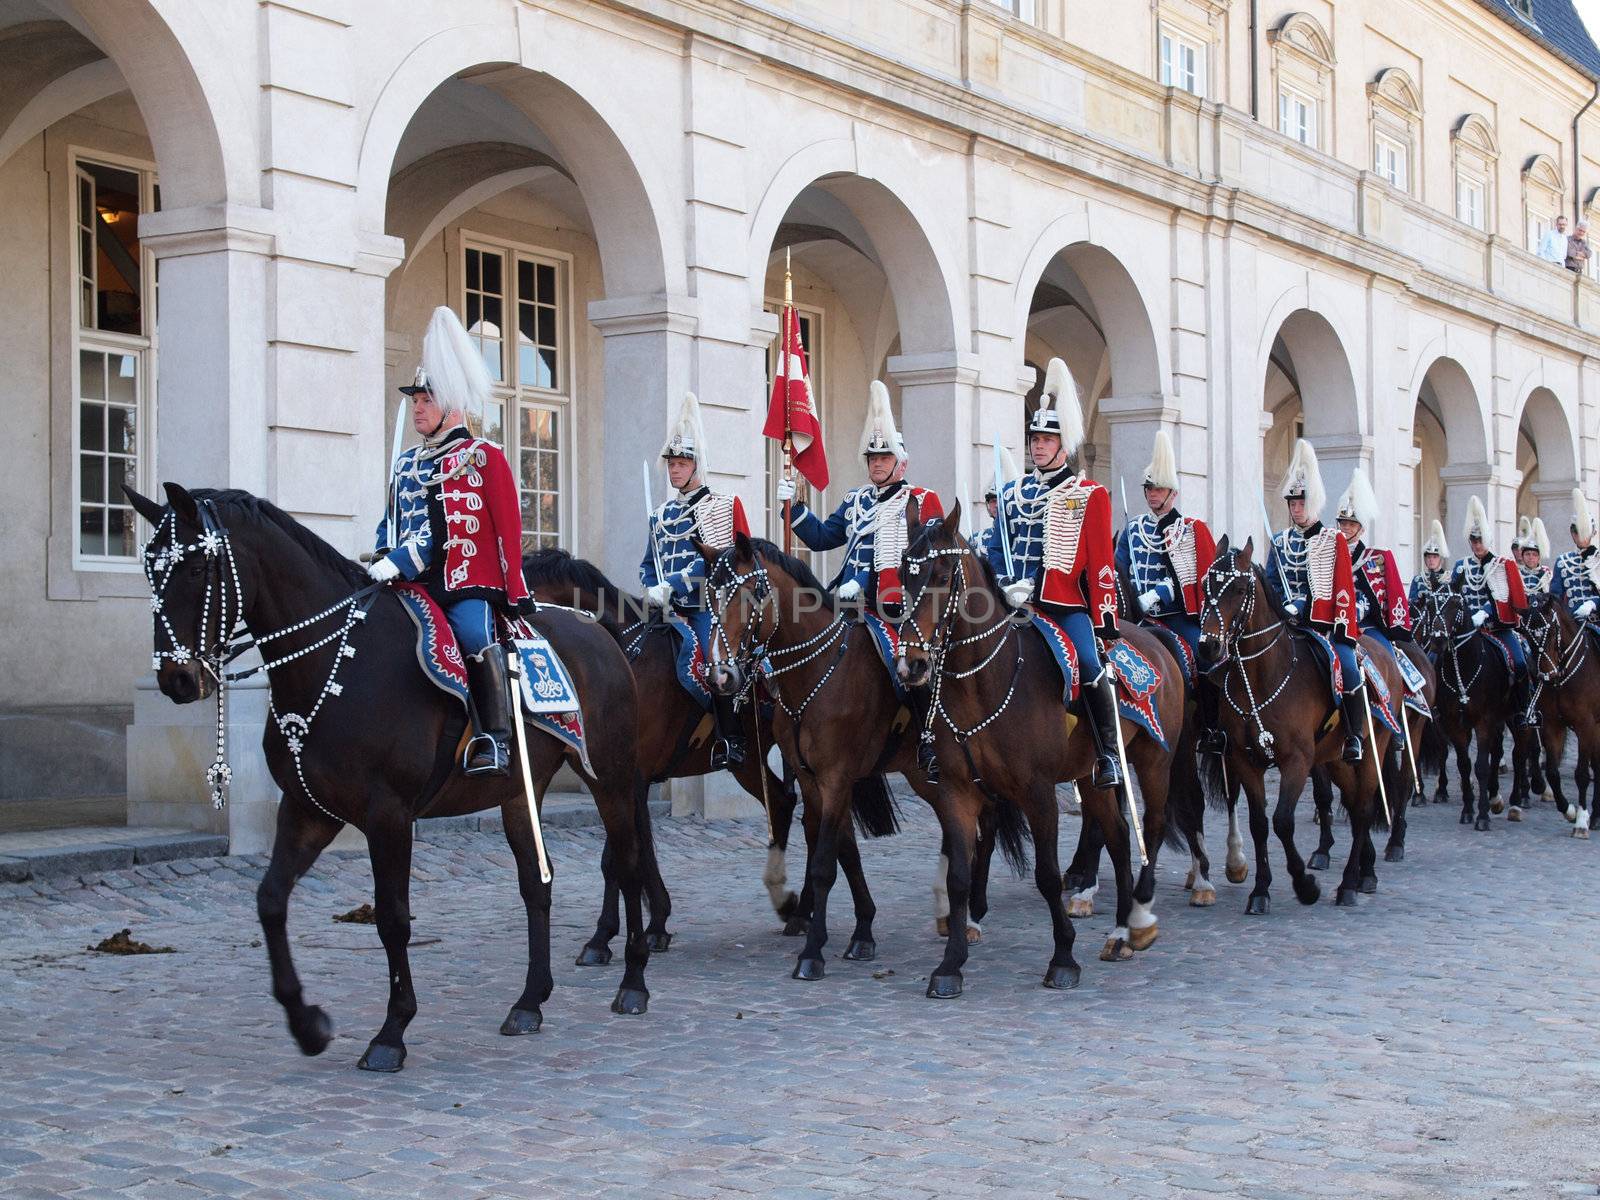 COPENHAGEN - APR 16: The Danish Royal guards on horses escorts the queen during the celebration of Queen Margrethe's 70th birthday on April 16, 2010 in Copenhagen, Denmark.
